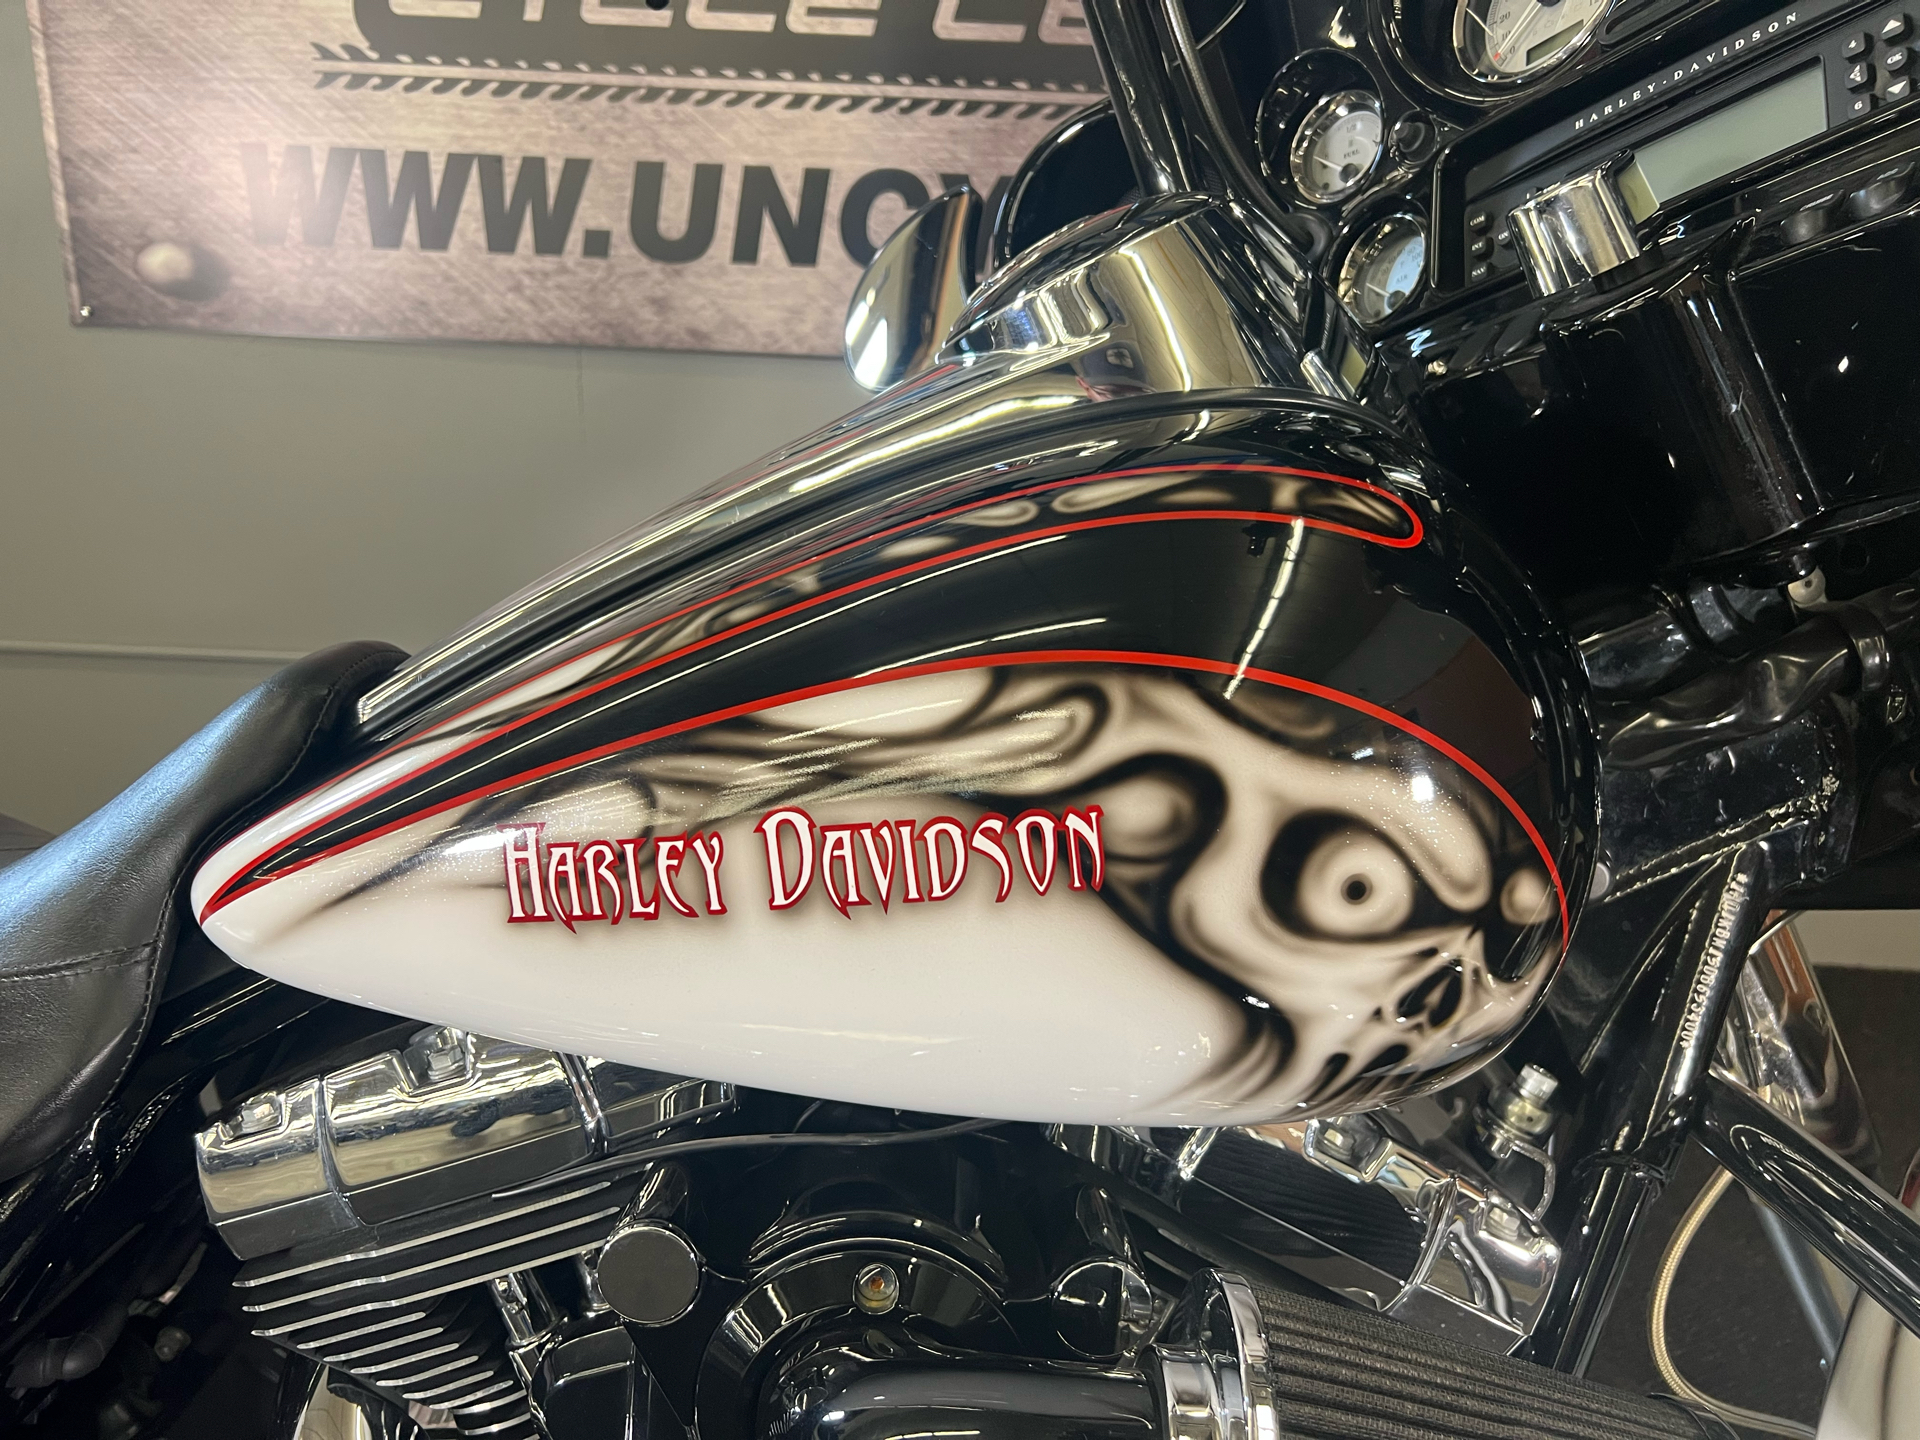 2013 Harley-Davidson Street Glide® in Tyrone, Pennsylvania - Photo 4